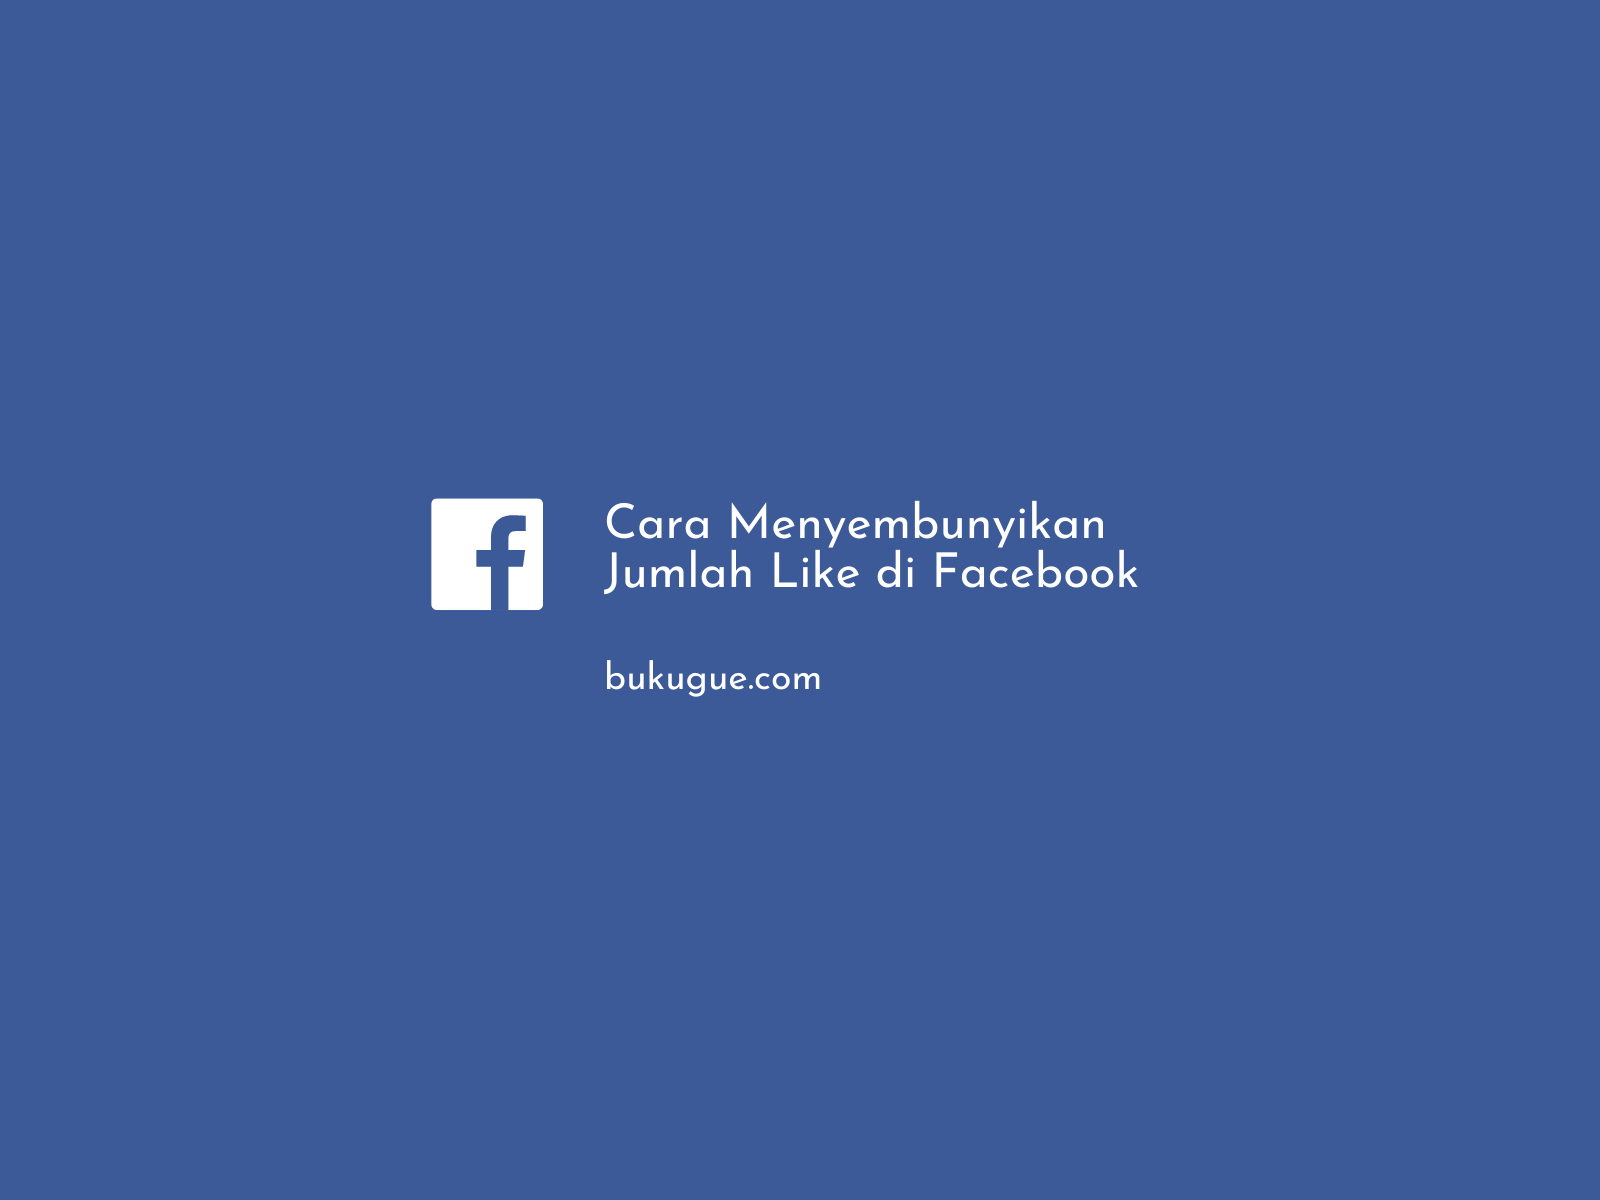 Cara Menyembunyikan Jumlah Like di Facebook